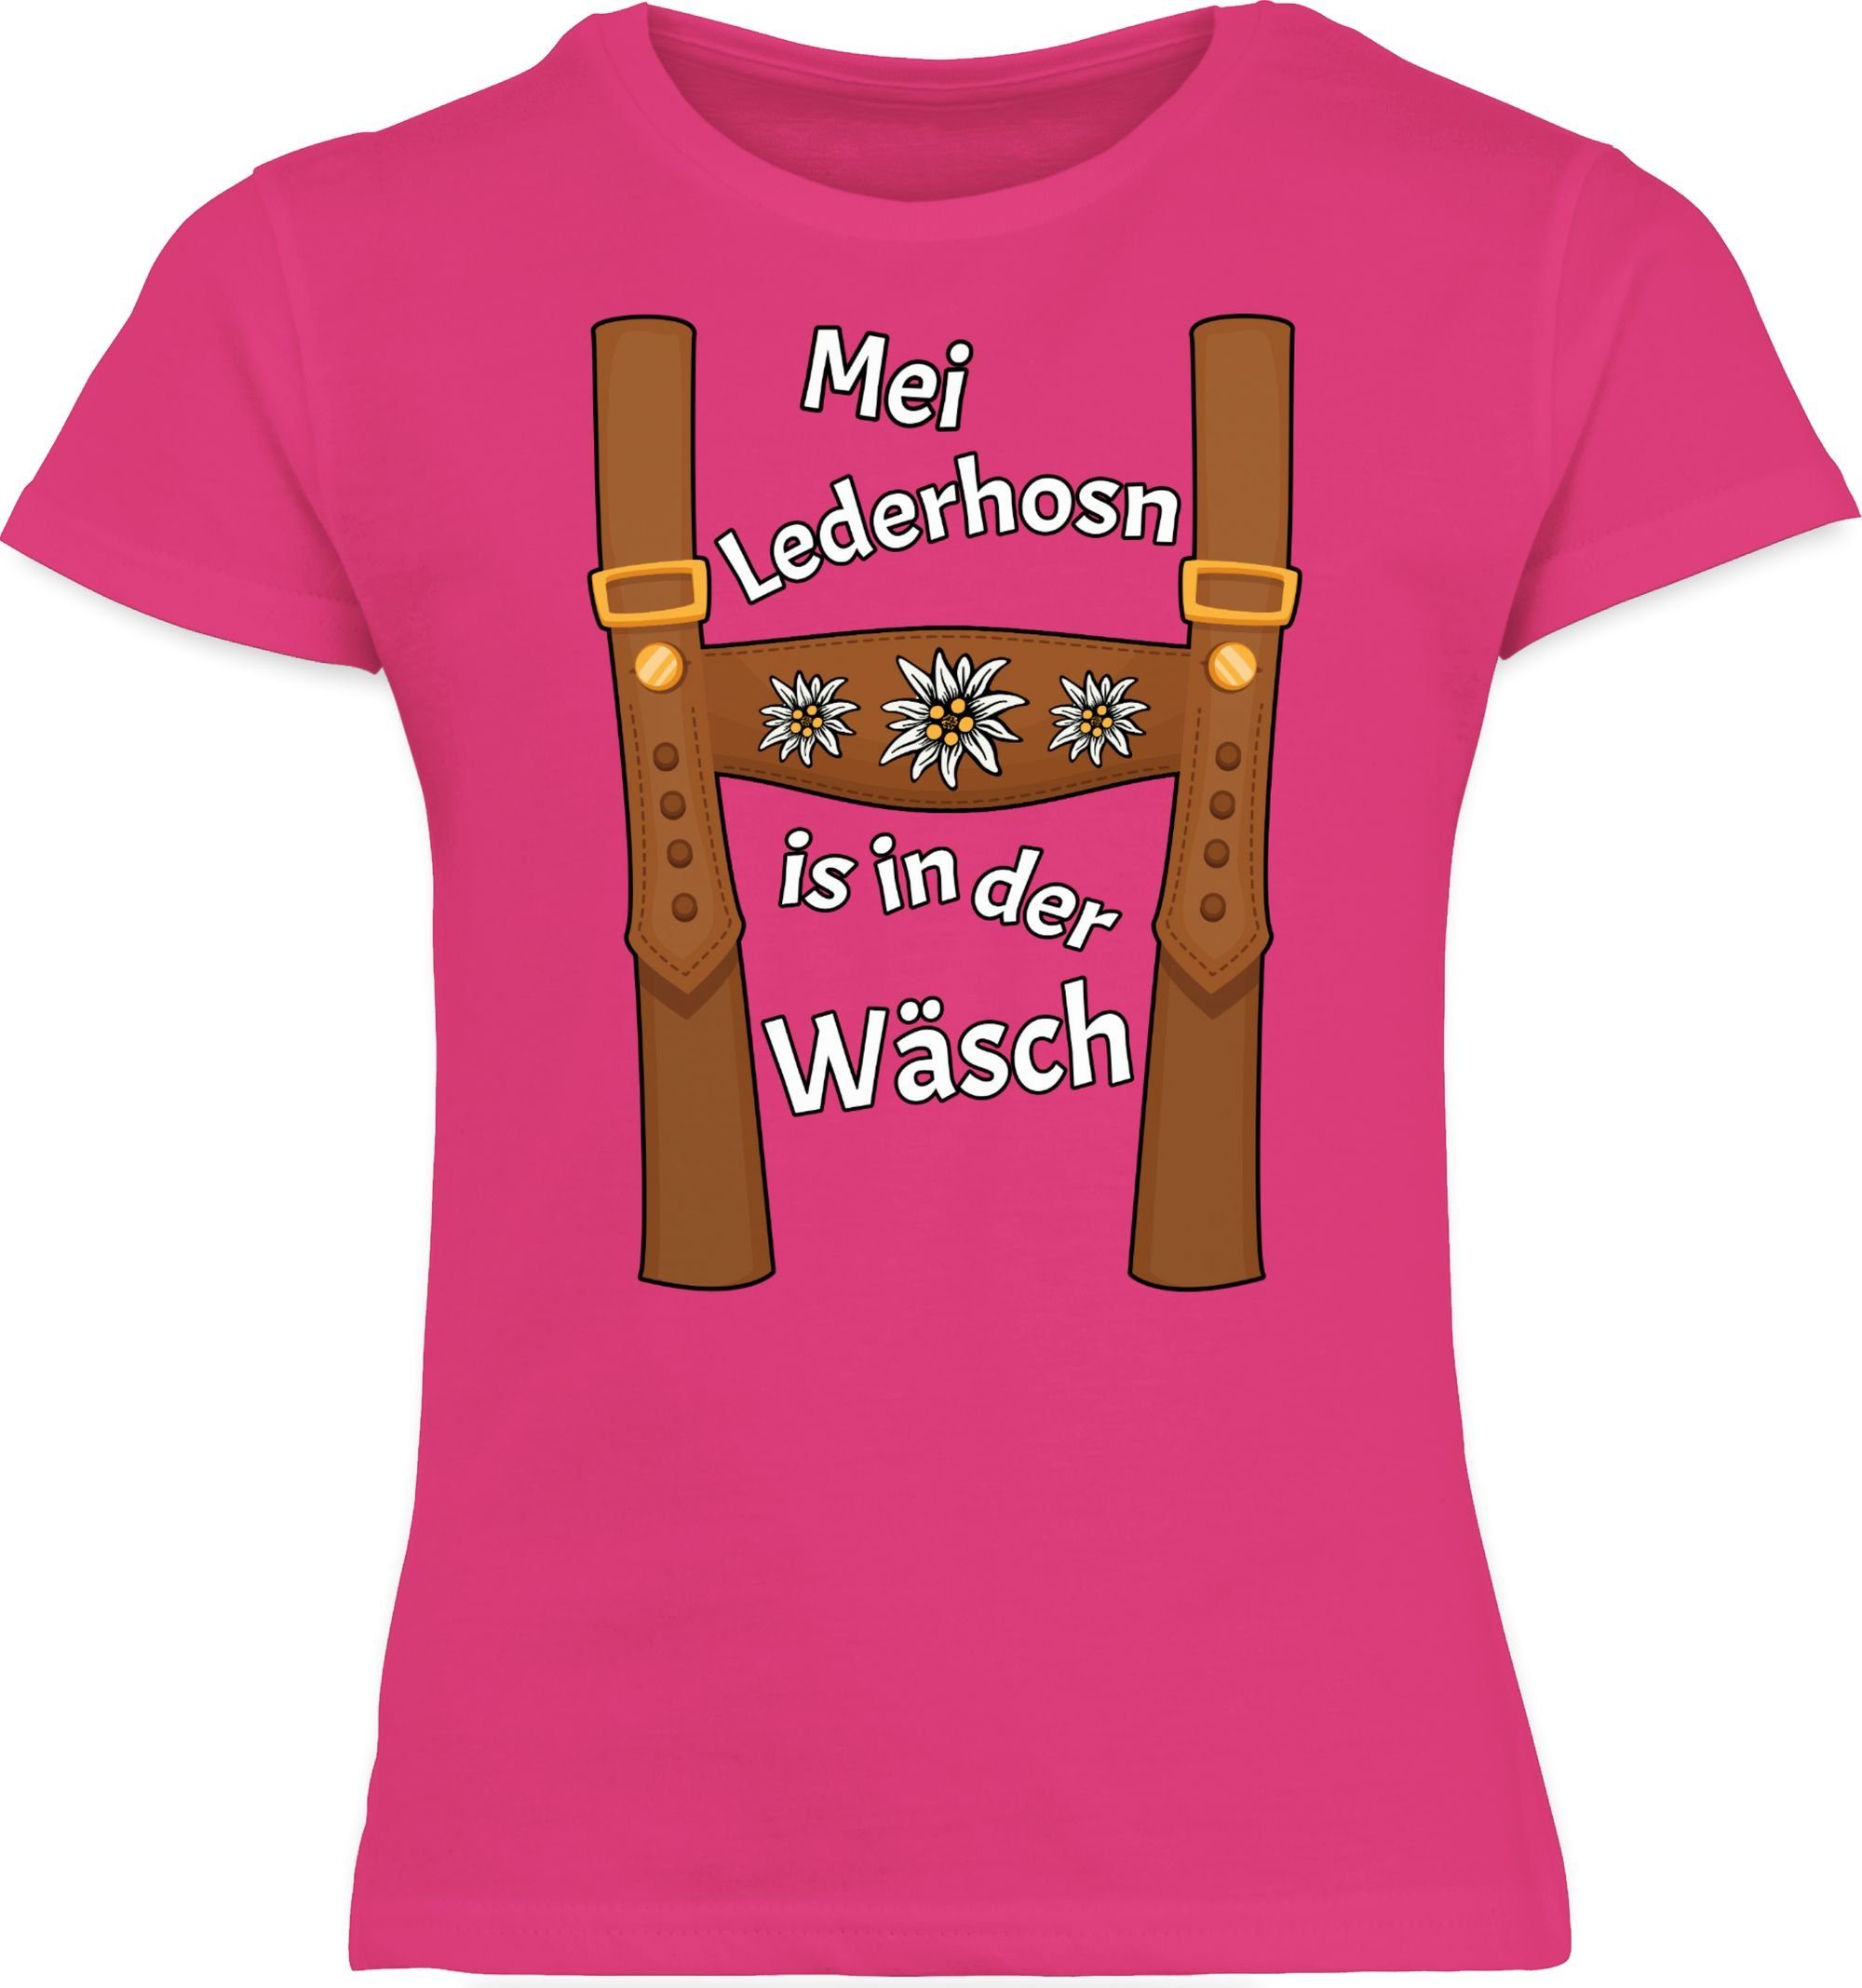 Mode Lederhosn 02 für Shirtracer - Oktoberfest Fuchsia Outfit Lederhose Wäsch Meine der Mei Kinder da Wäsche in is in T-Shirt ist